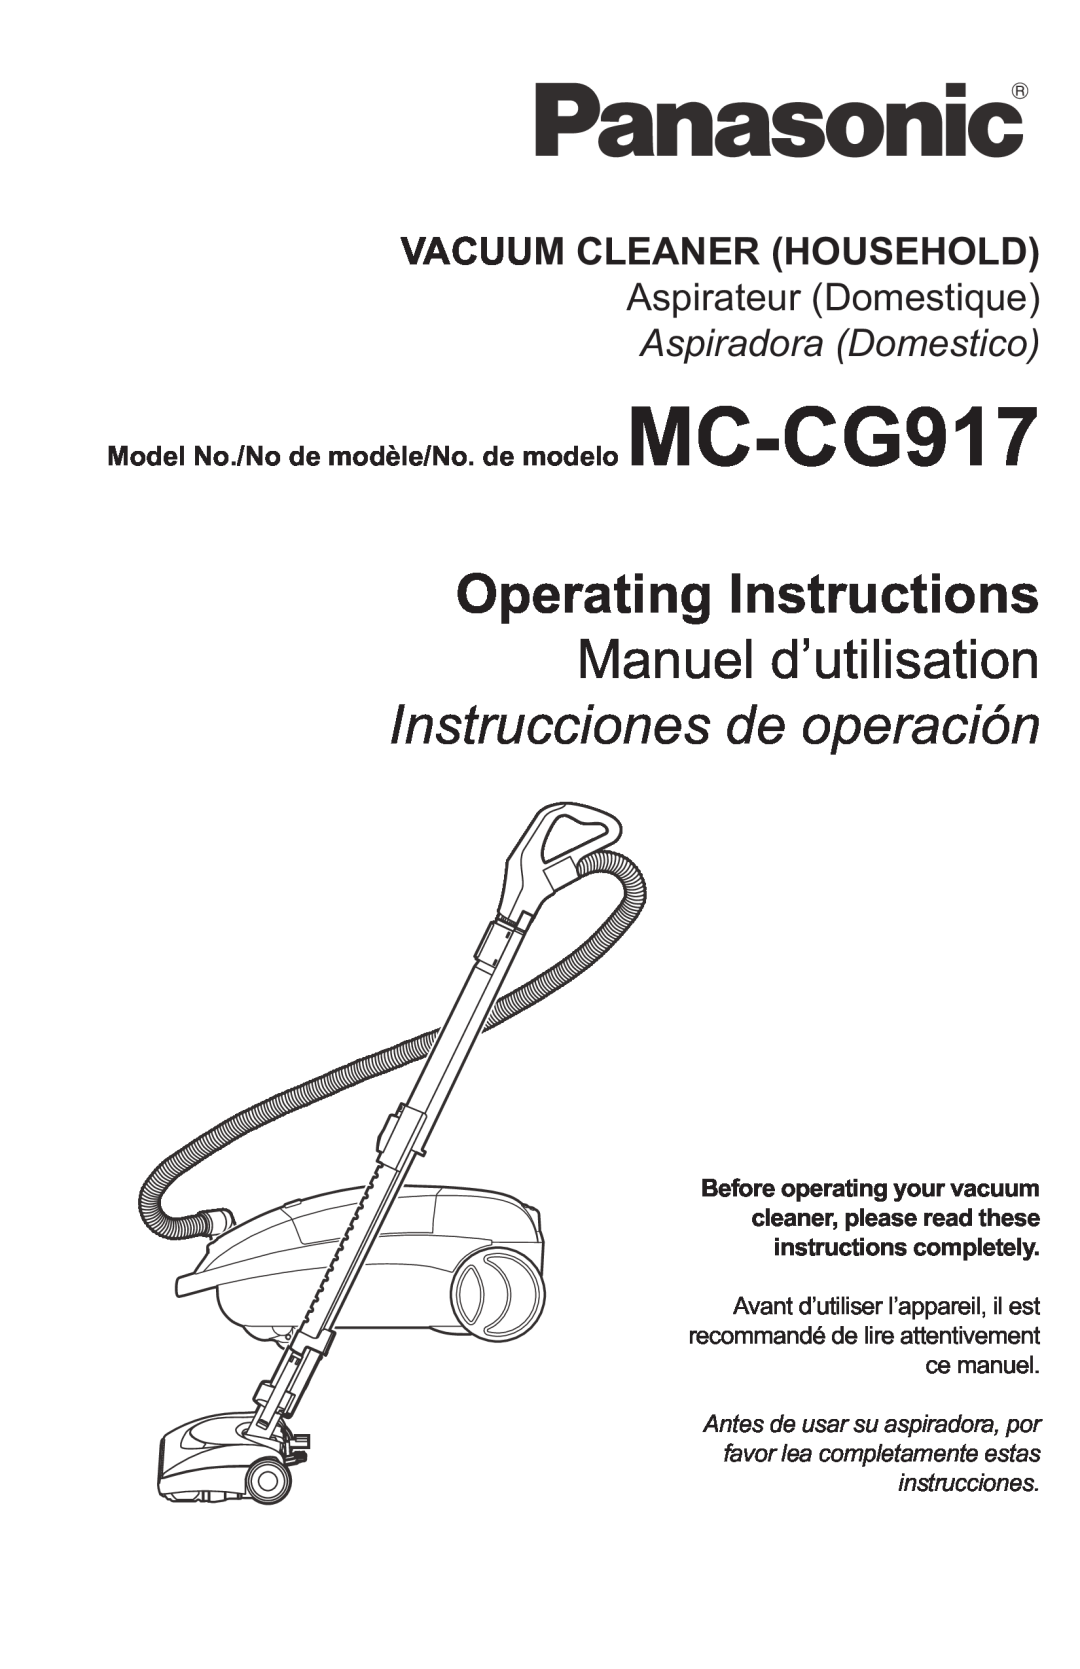 Panasonic MCCG917 manuel dutilisation Operating Instructions, Manuel d’utilisation, Instrucciones de operación 